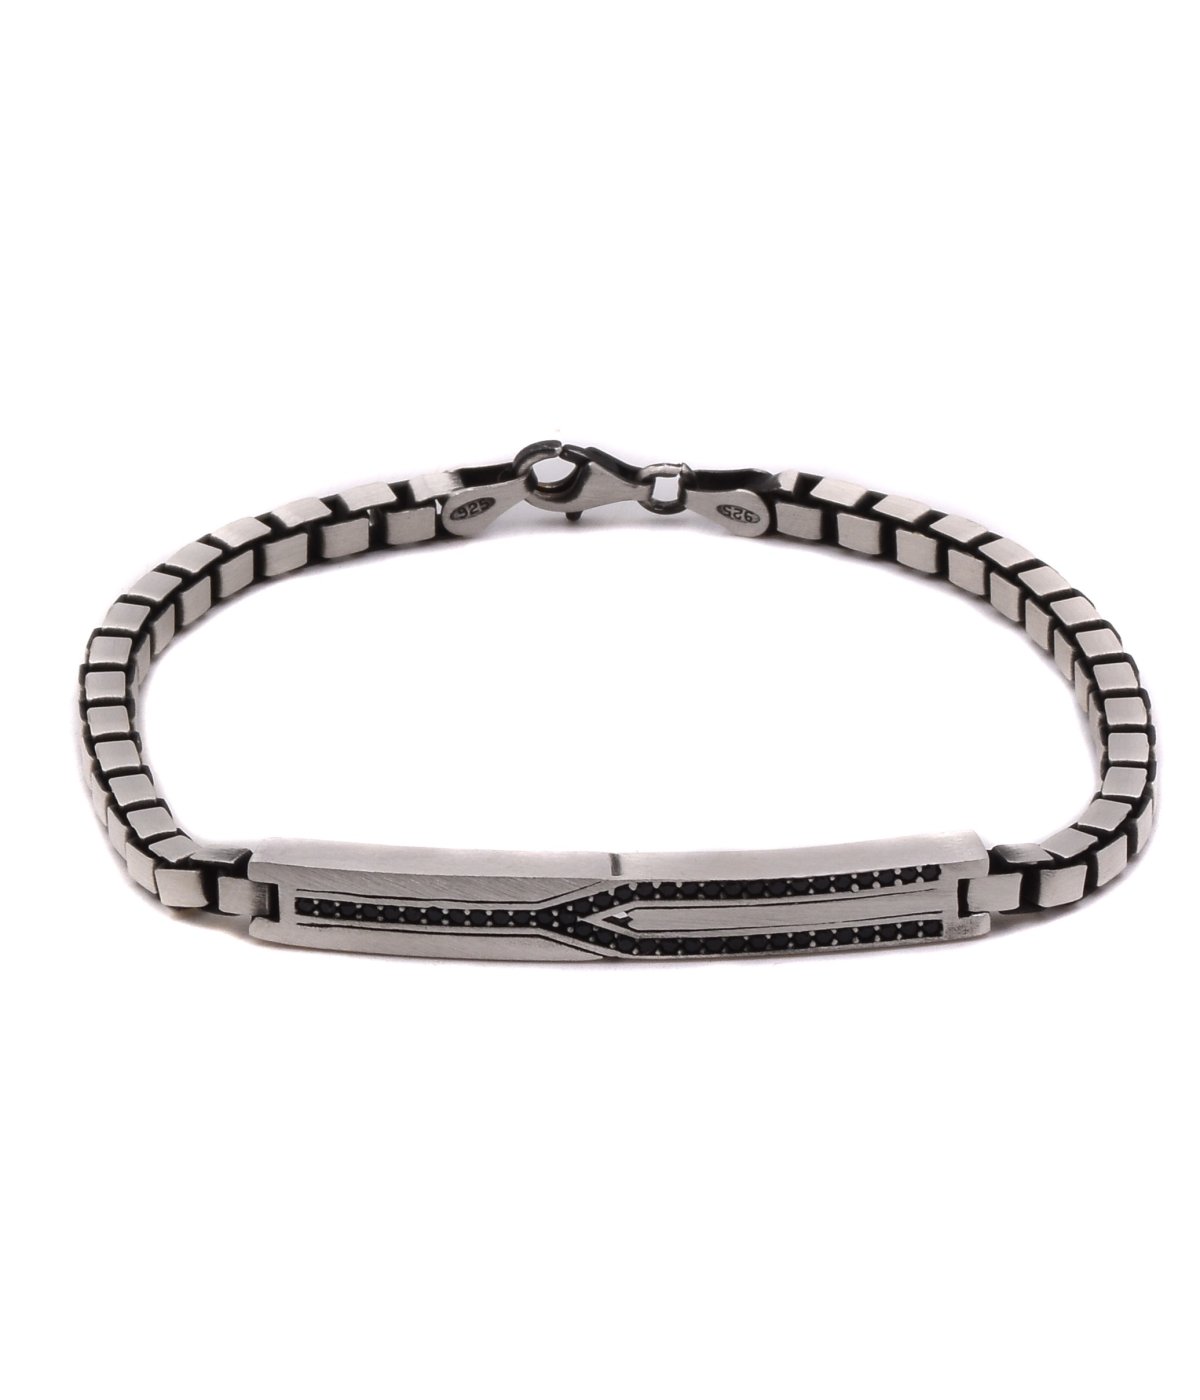 Byzantine Silver Bracelet For Men - 9mm Wide - 40 Grams For The 8.5 Inch-hdcinema.vn